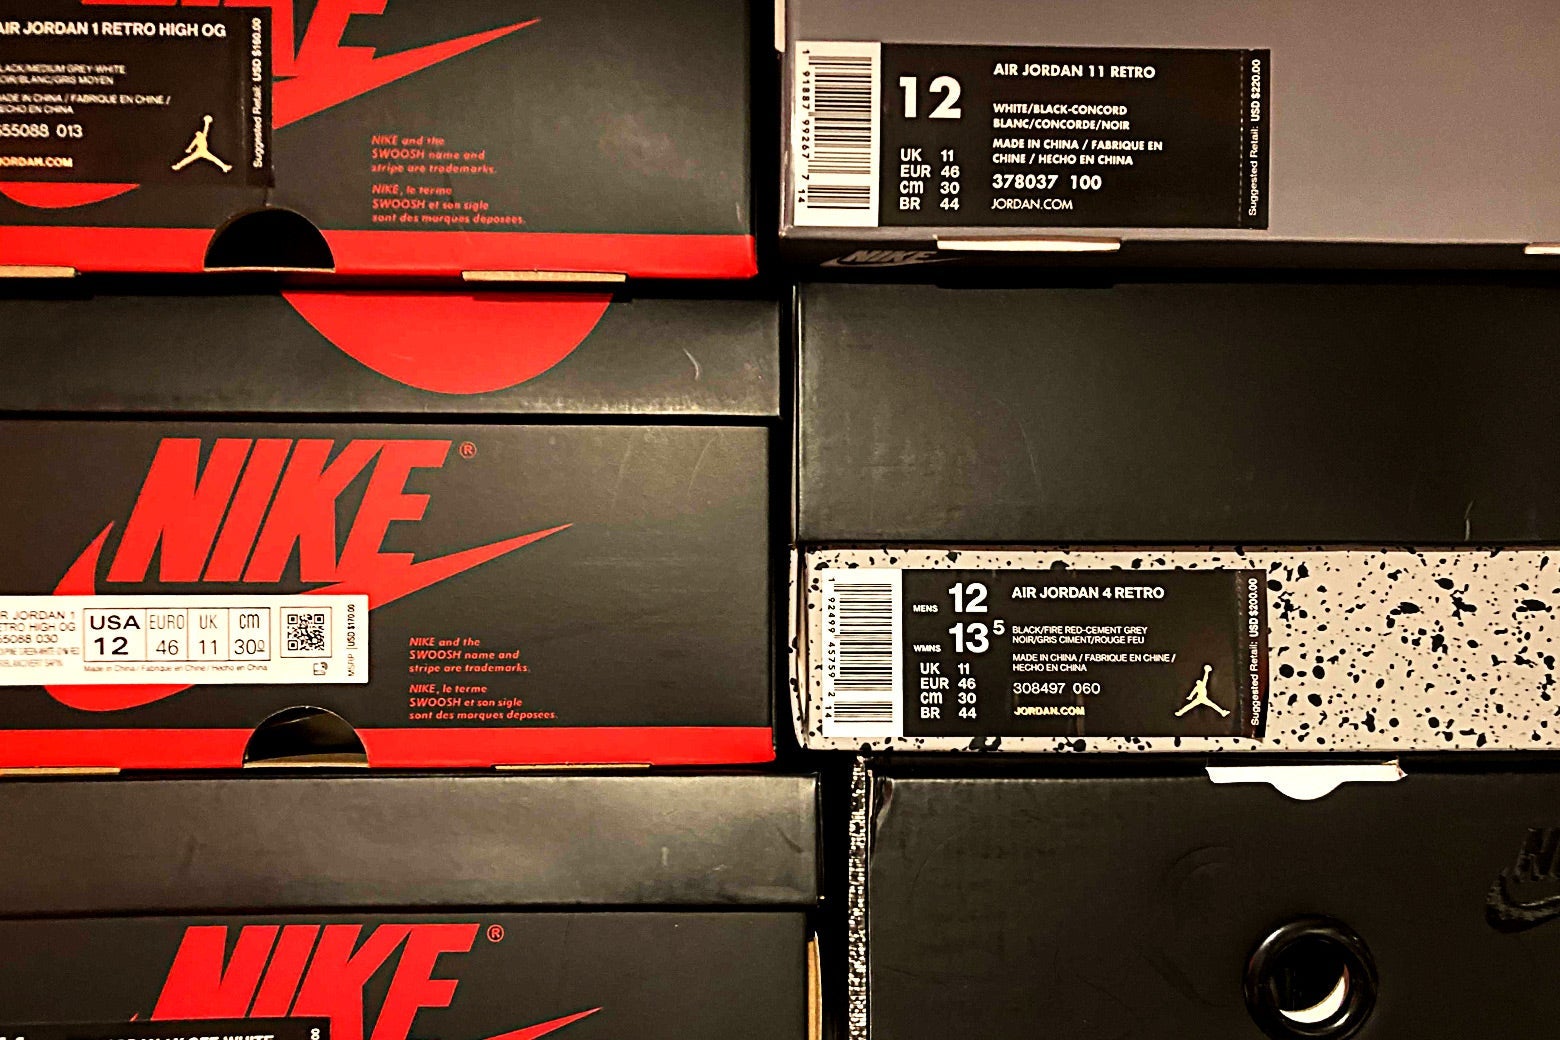 Stacks of Nike sneaker boxes